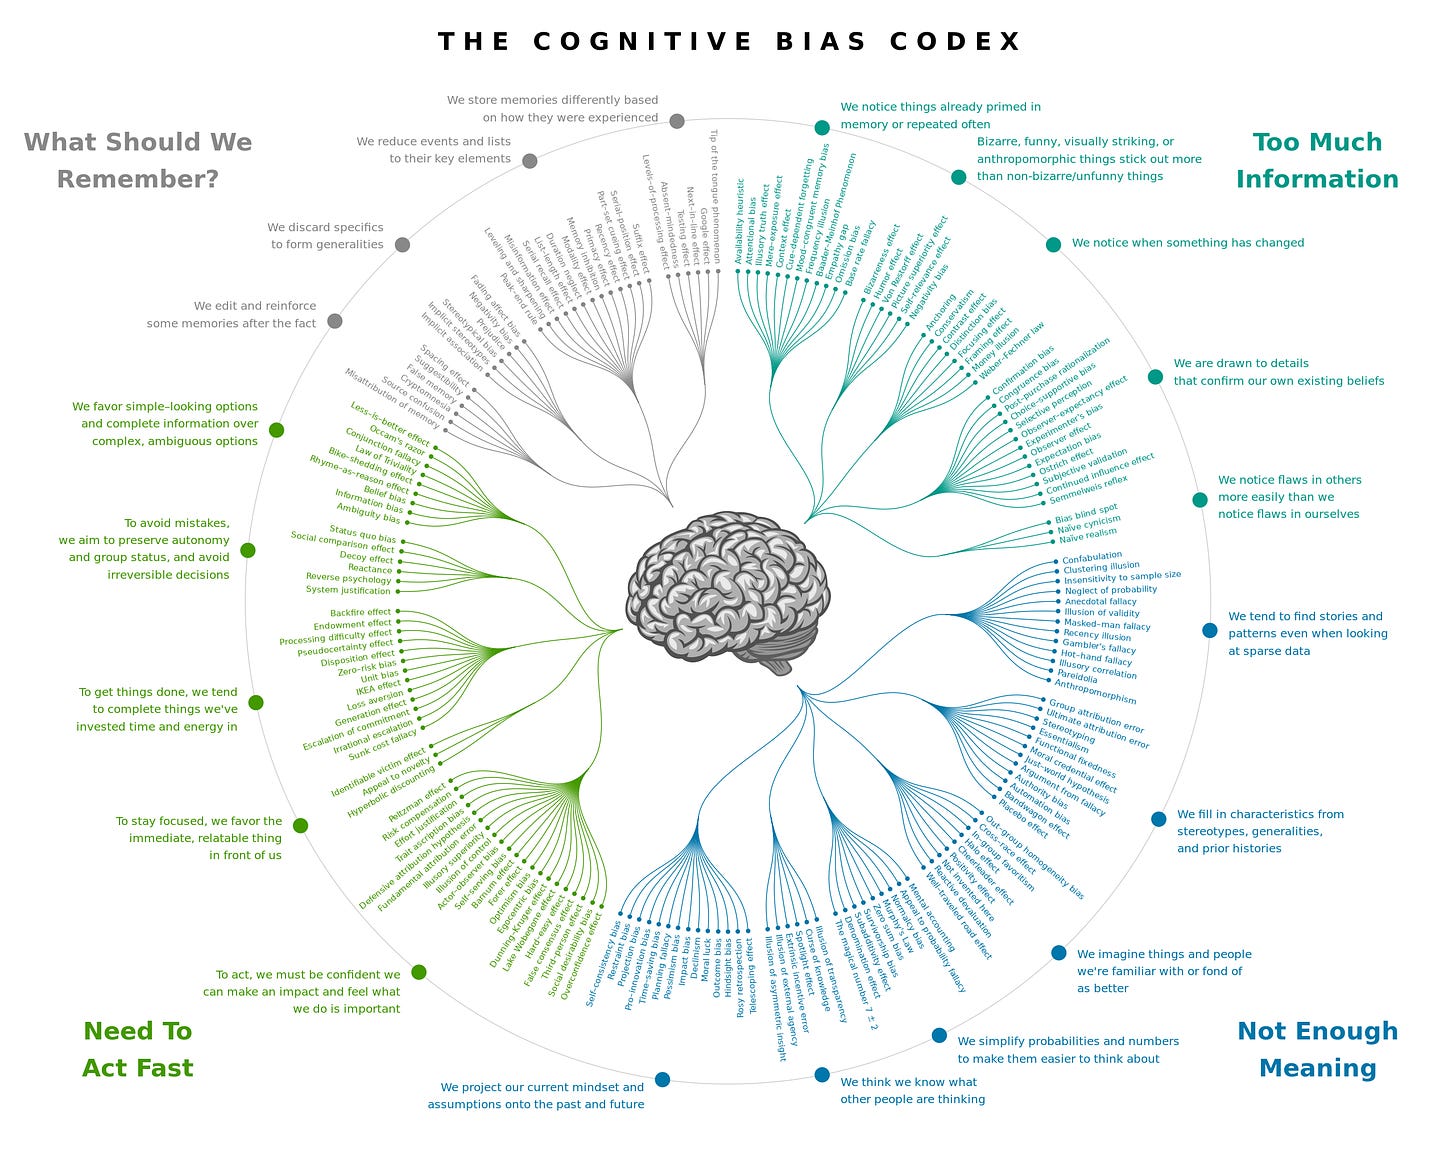 The Cognitive Bias Index